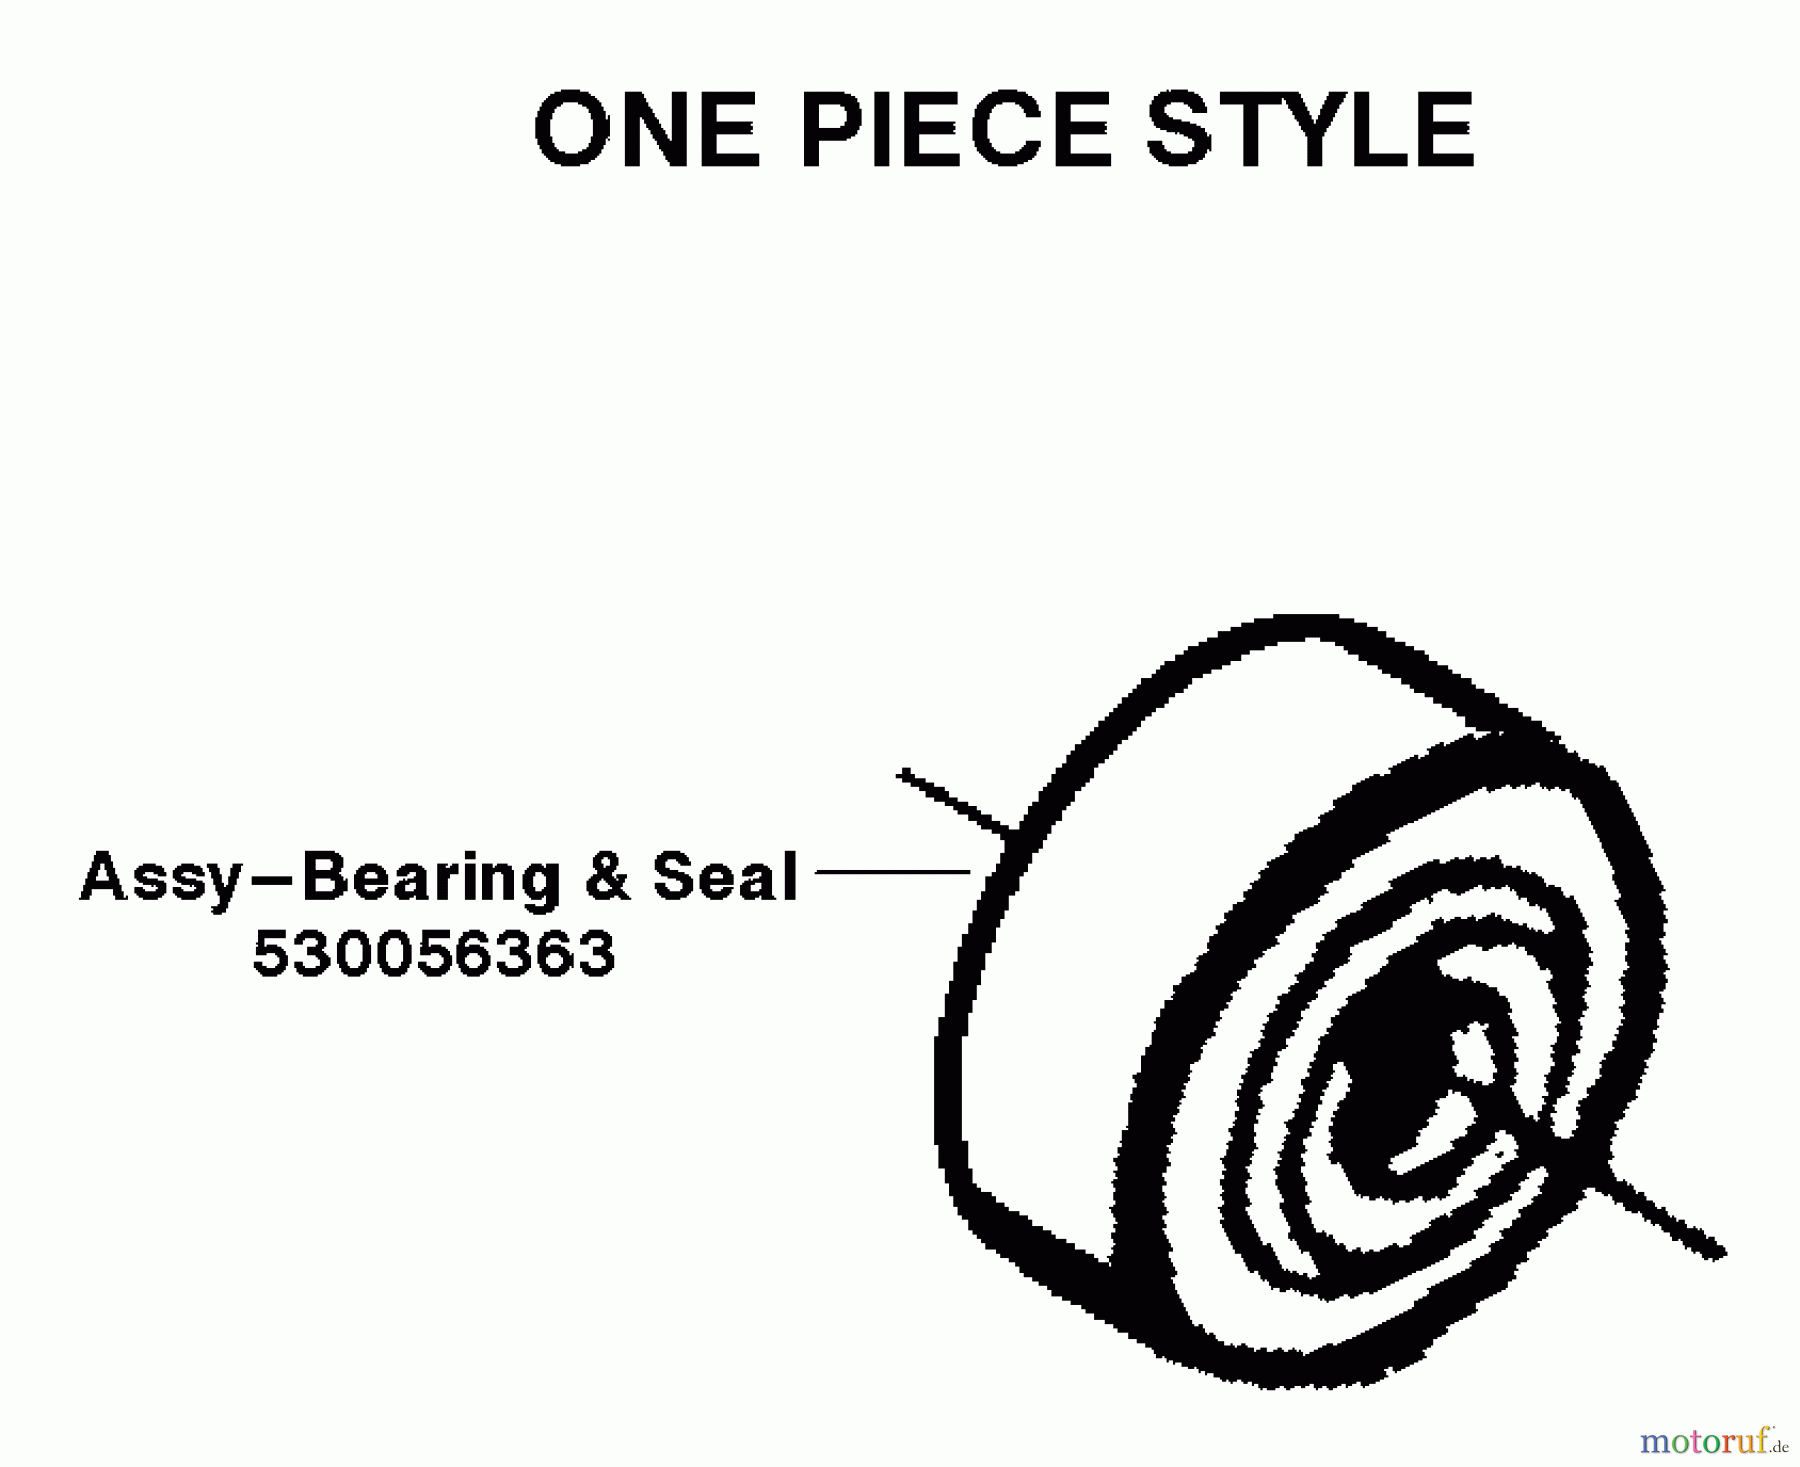  Poulan / Weed Eater Motorsägen PP295 (Type 2) - Poulan Pro Chainsaw Bearing & Seal - One Piece Style